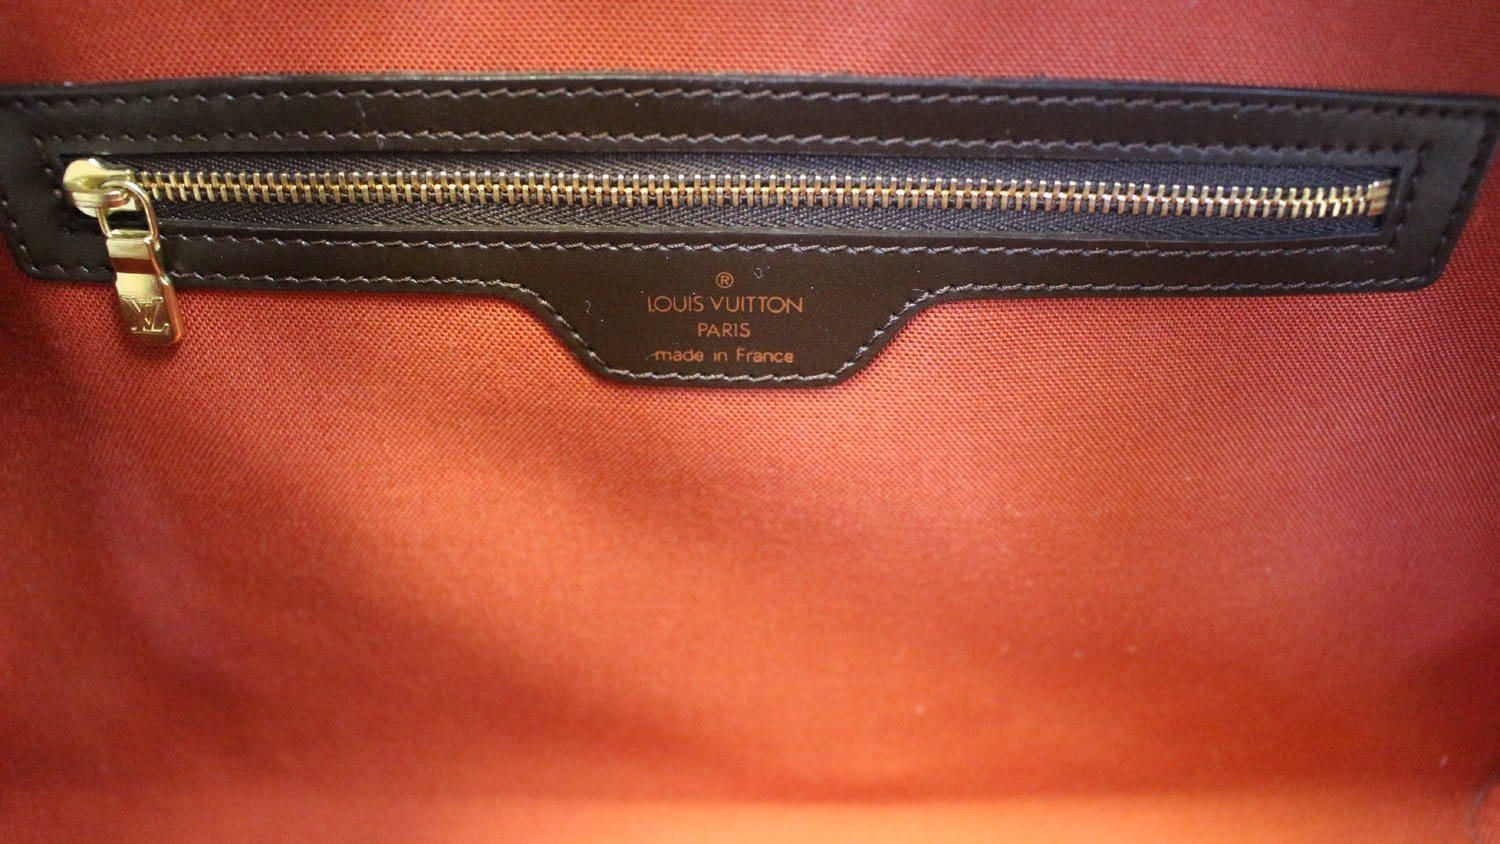 Louis Vuitton Damier Ebene Nolita MM. Made in France., Luxury